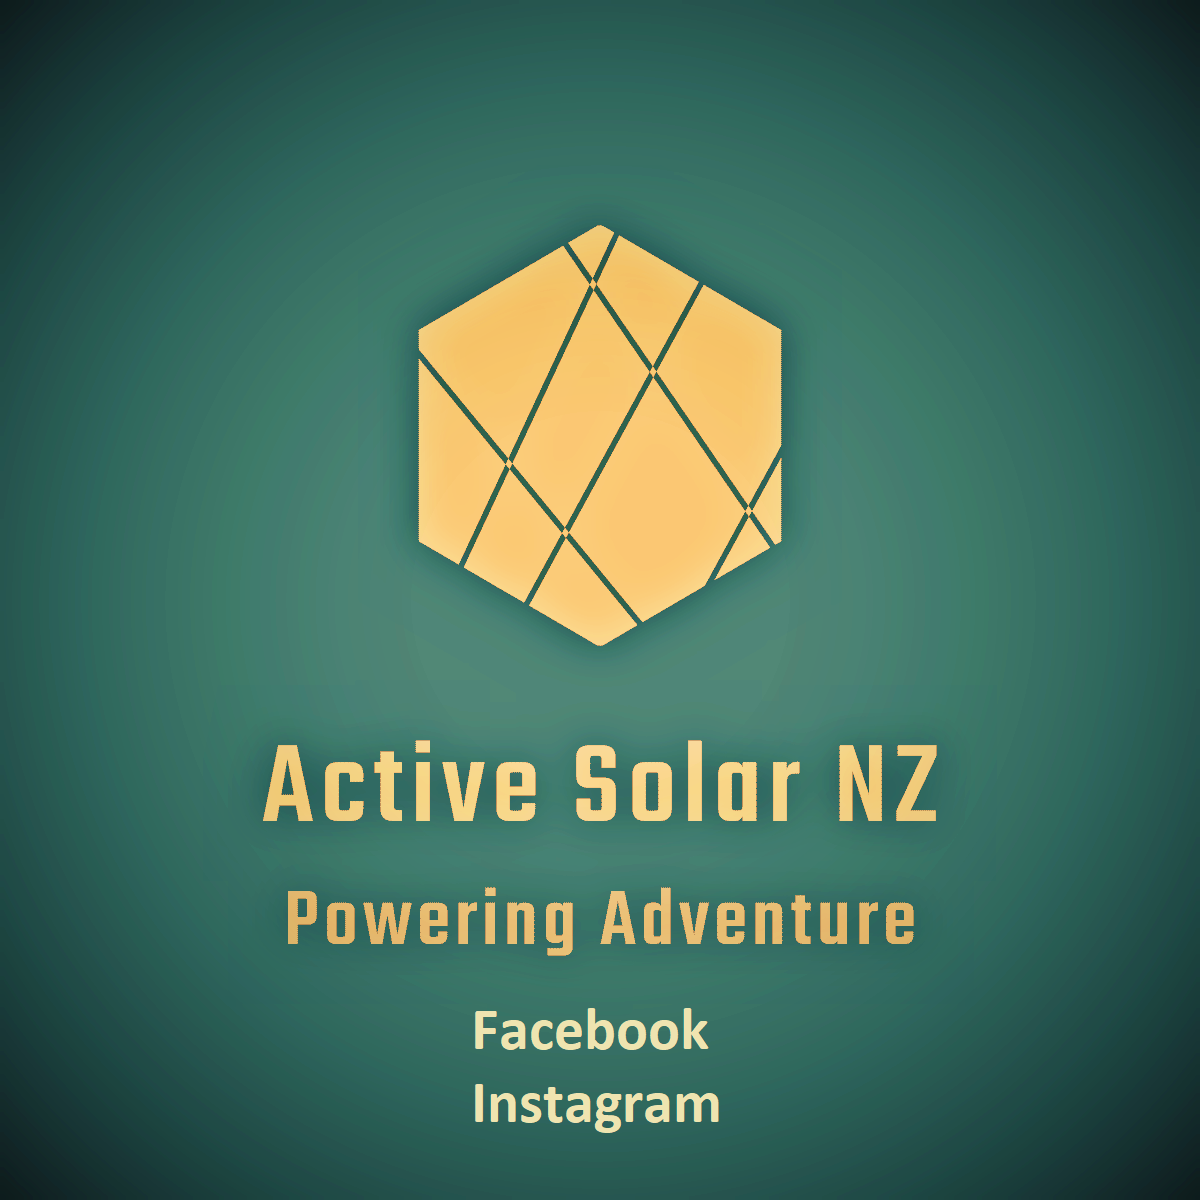 Active Solar NZ